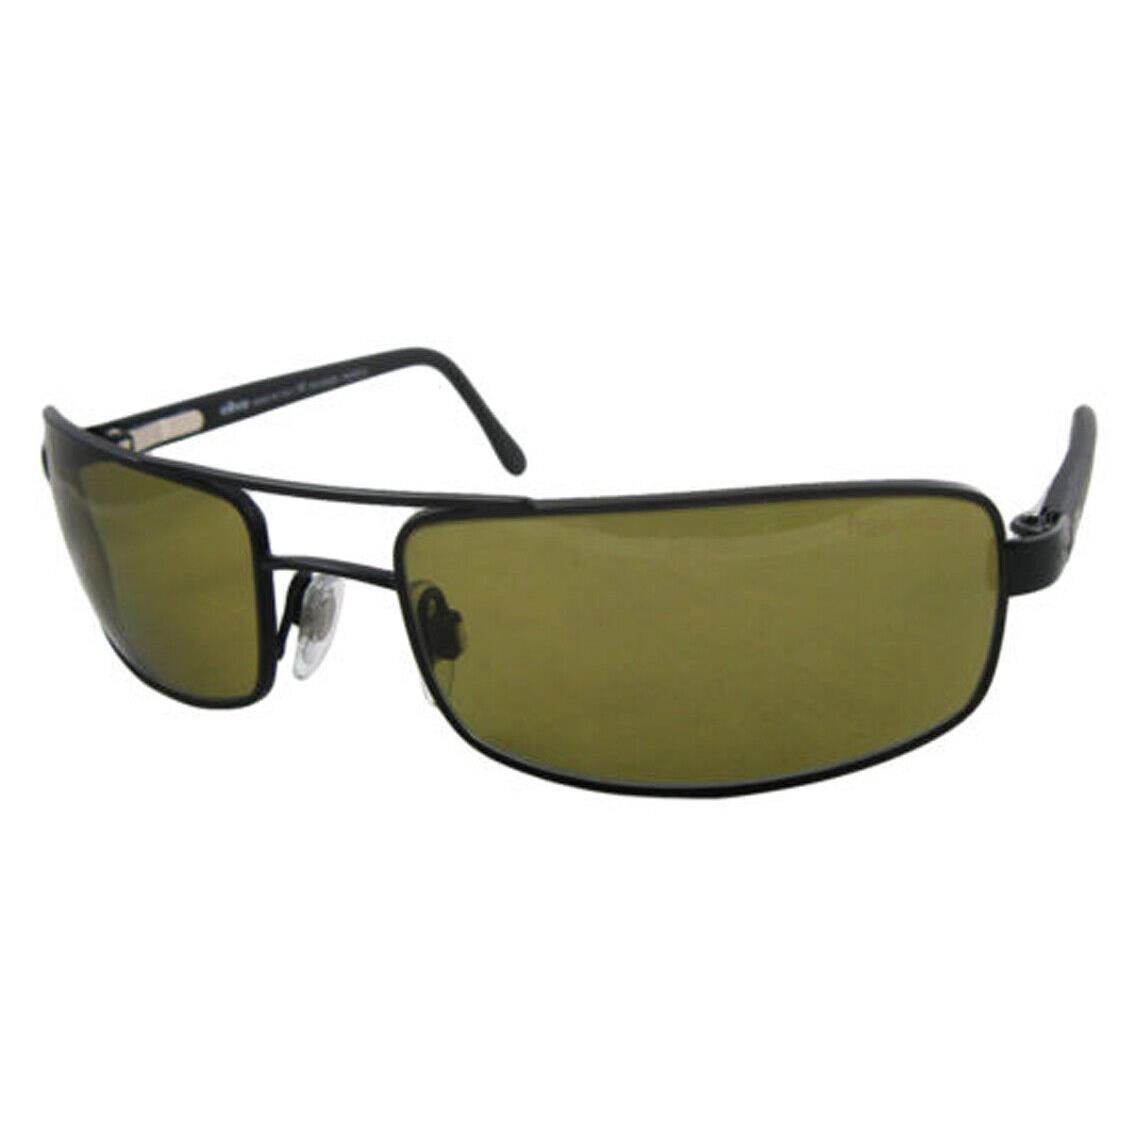 Revo Sunglasses 3029 001/Y3 Satin Black Frame w/ Polarized Olive Green Lens